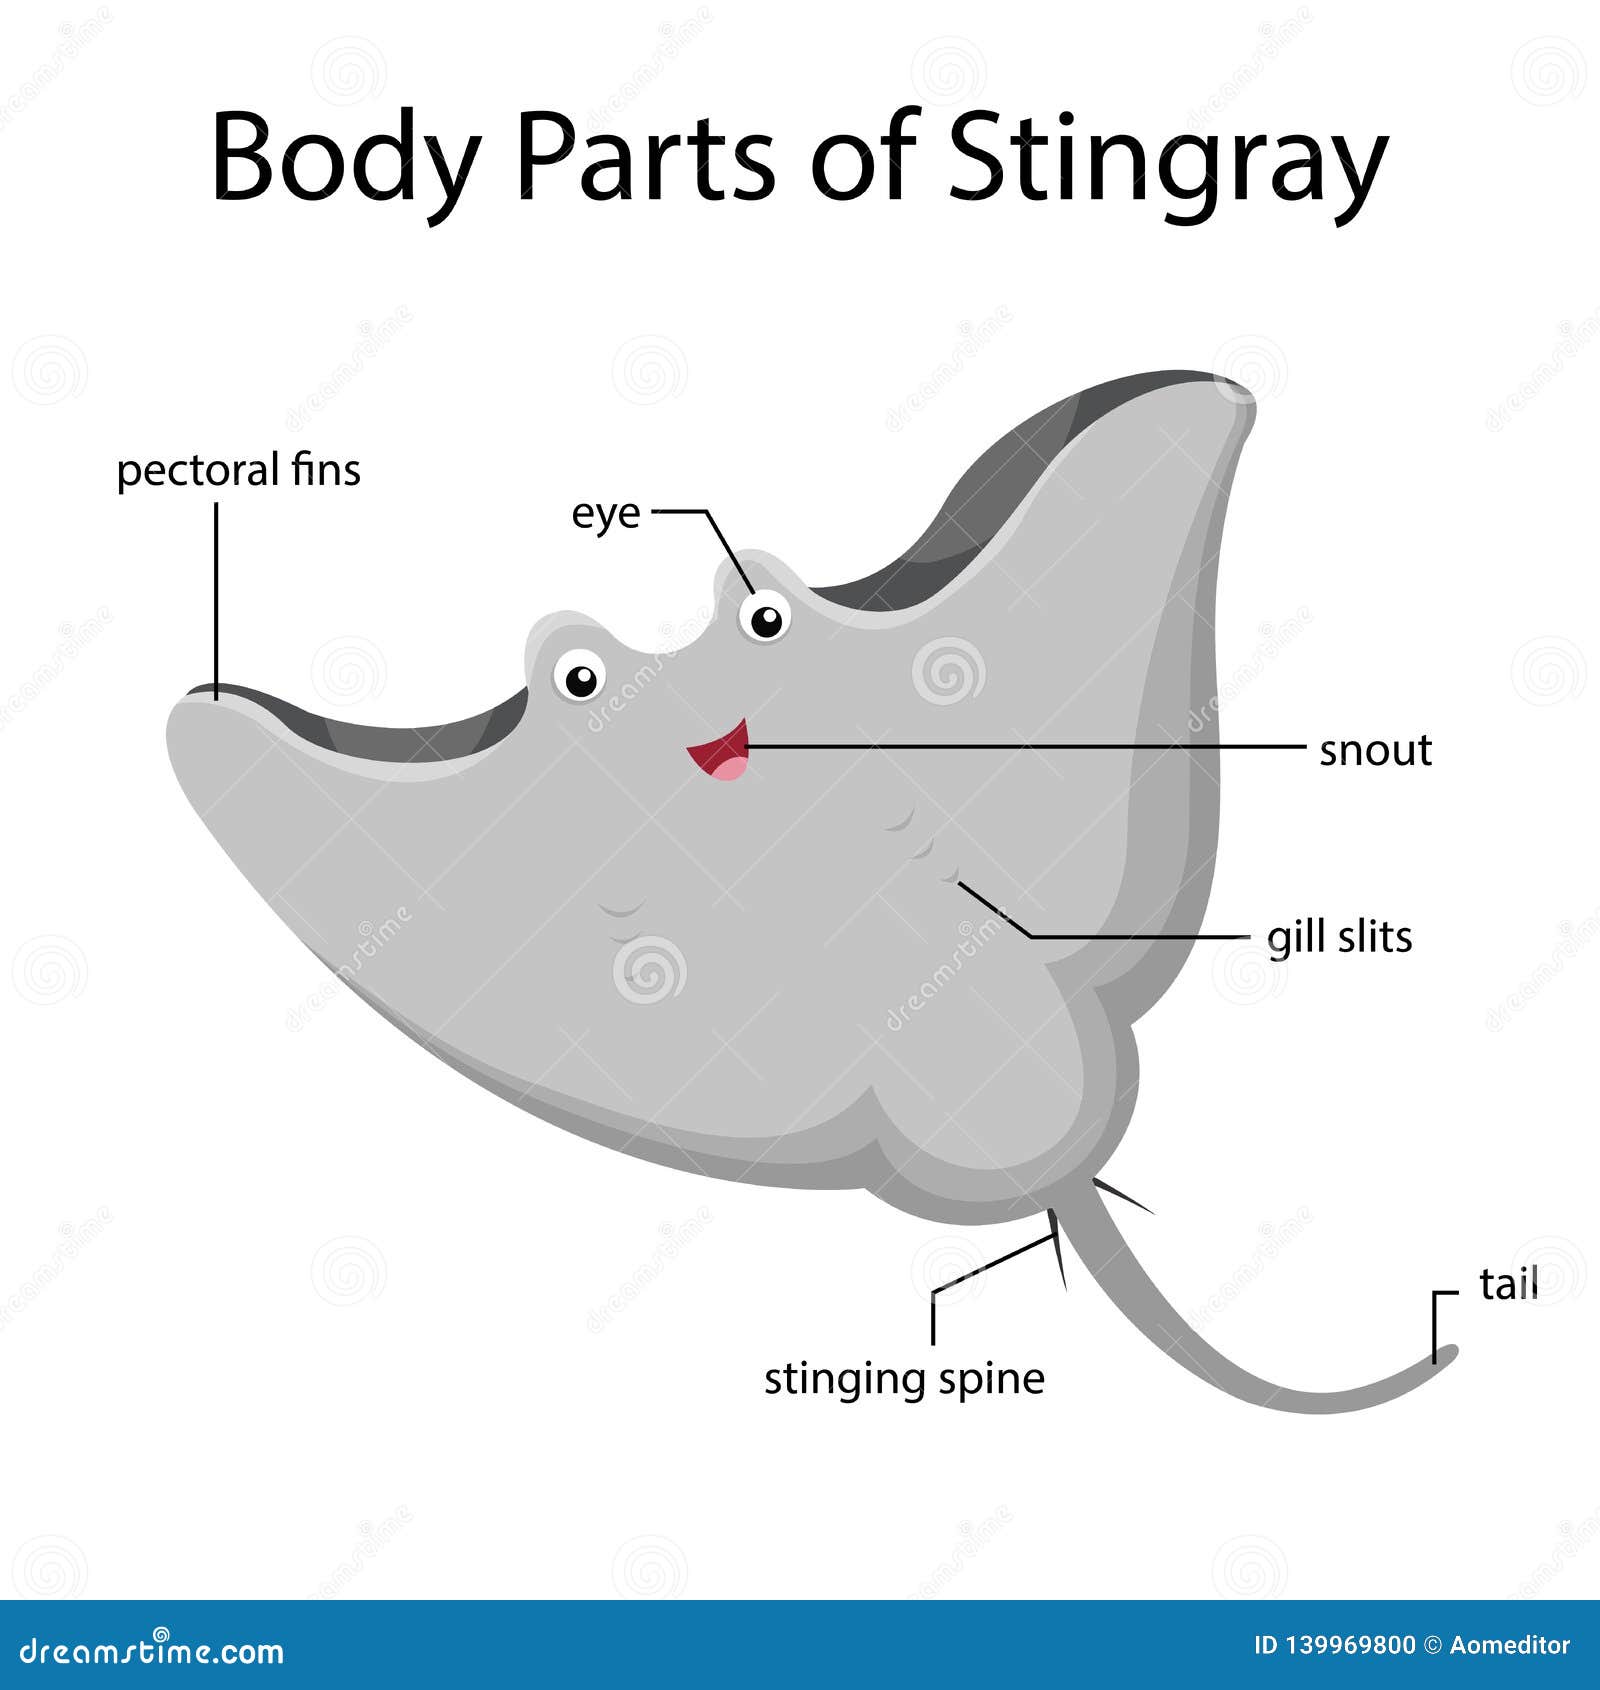 illustrator of body parts of stingray